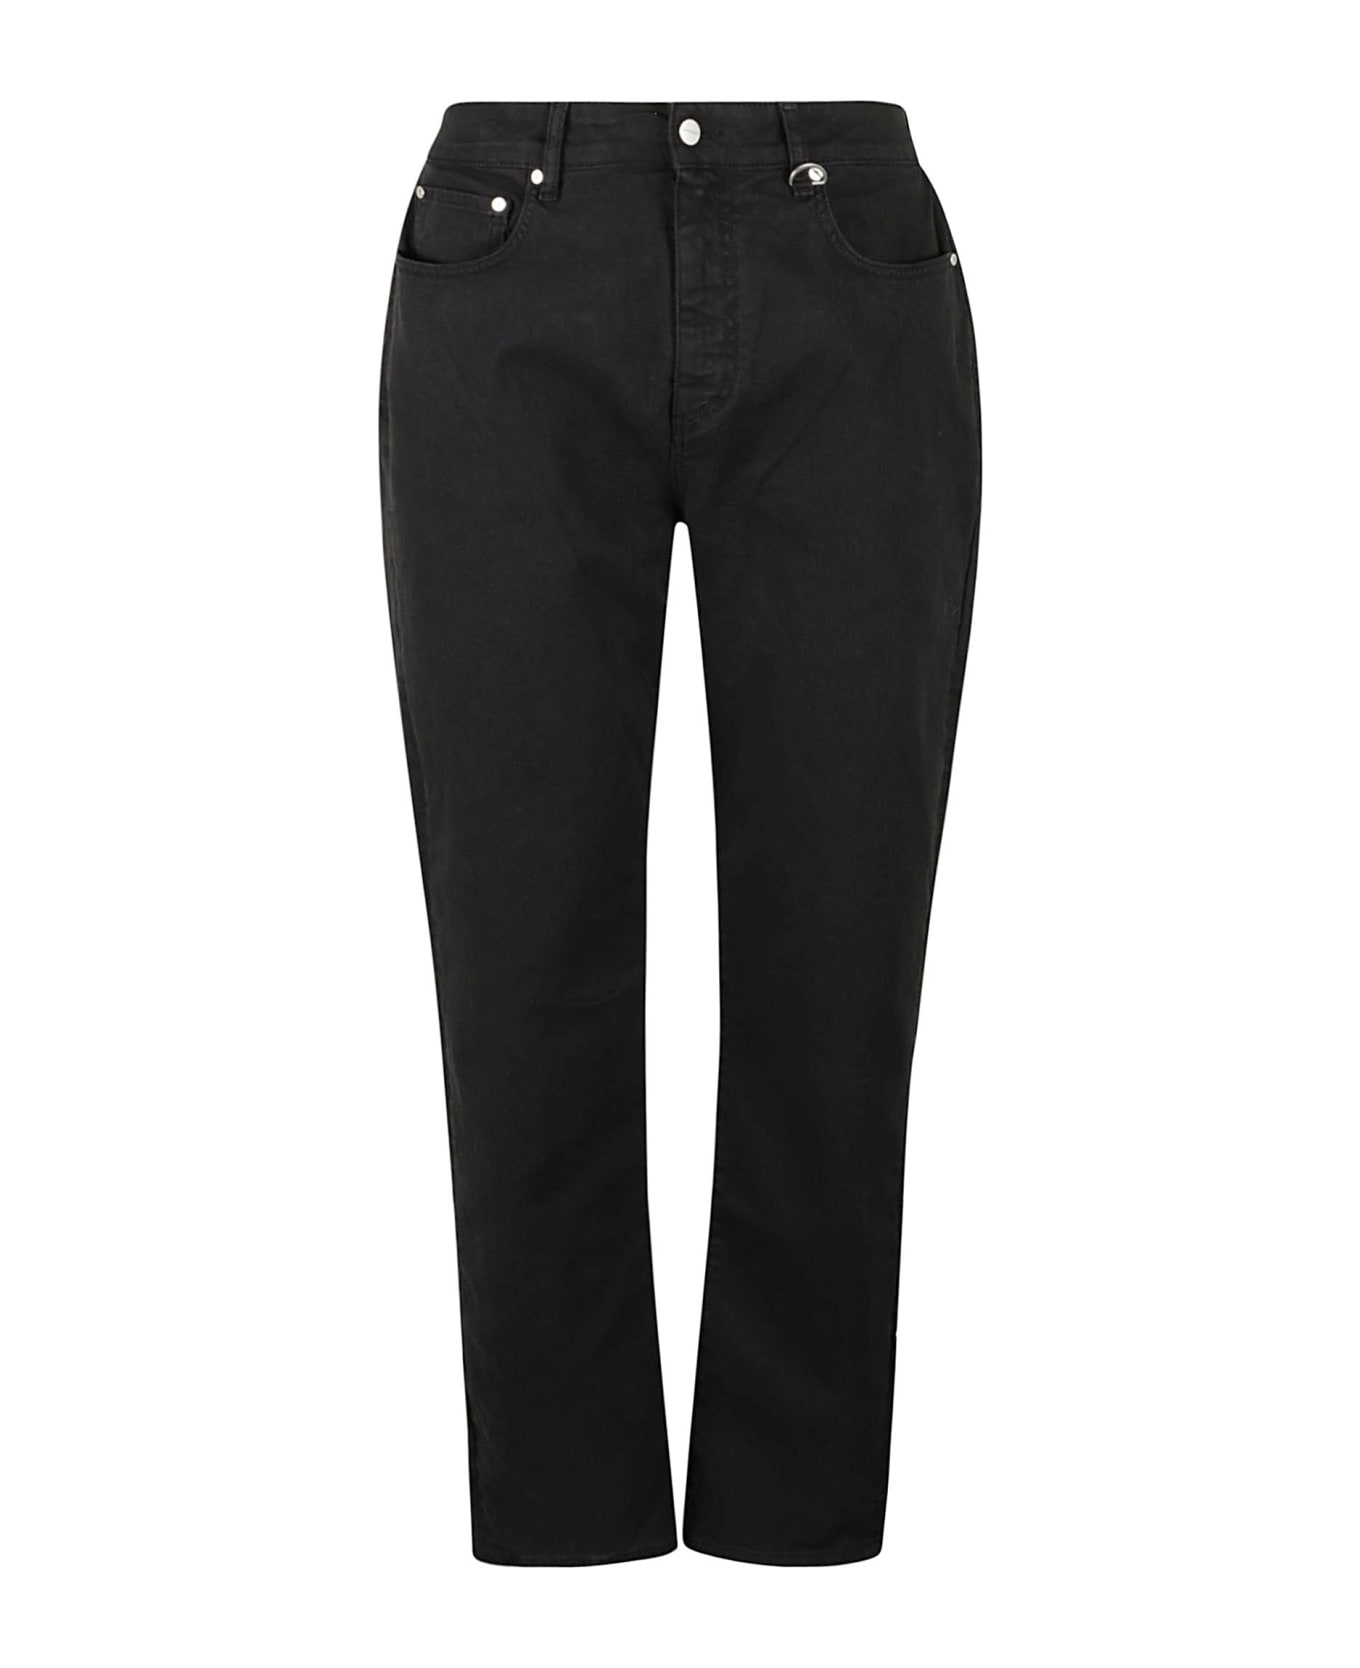 REPRESENT Waist Fit Buttoned Jeans - Black